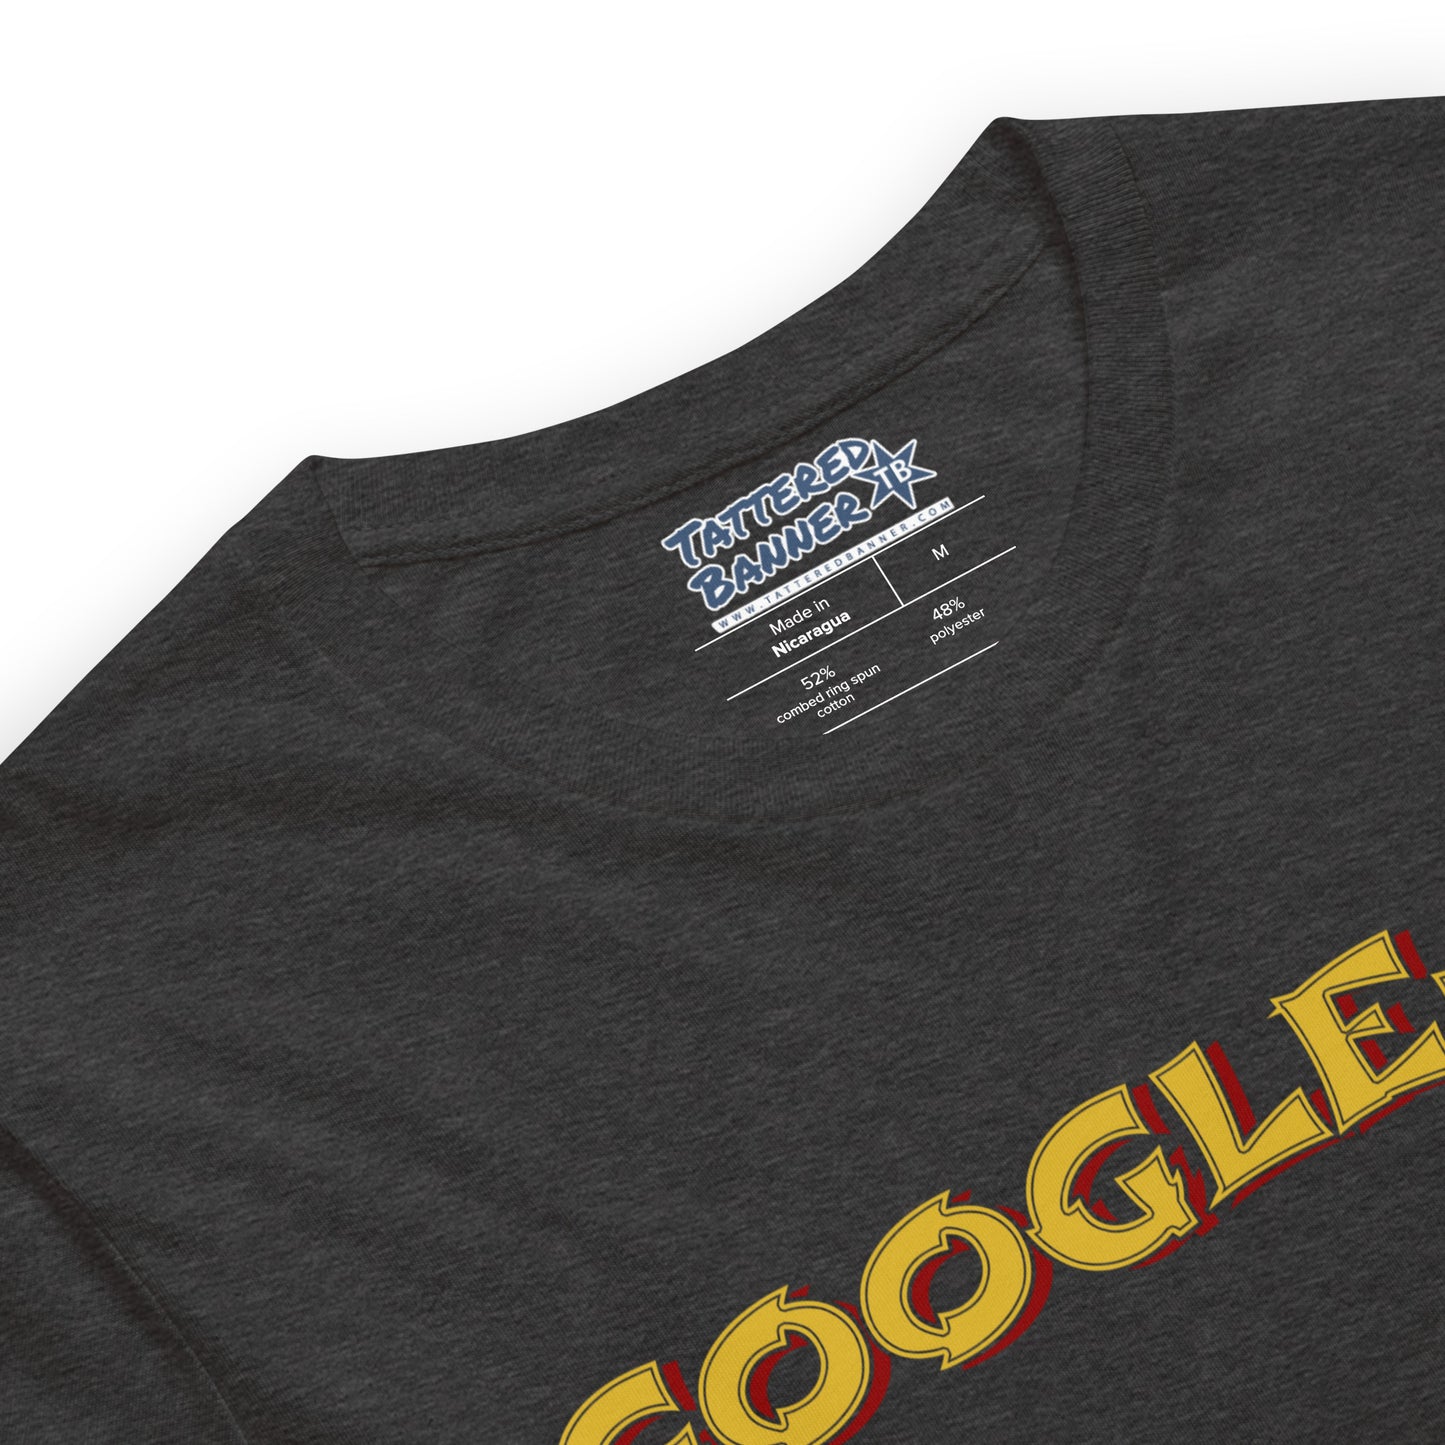 Google-Fu - Unisex t-shirt